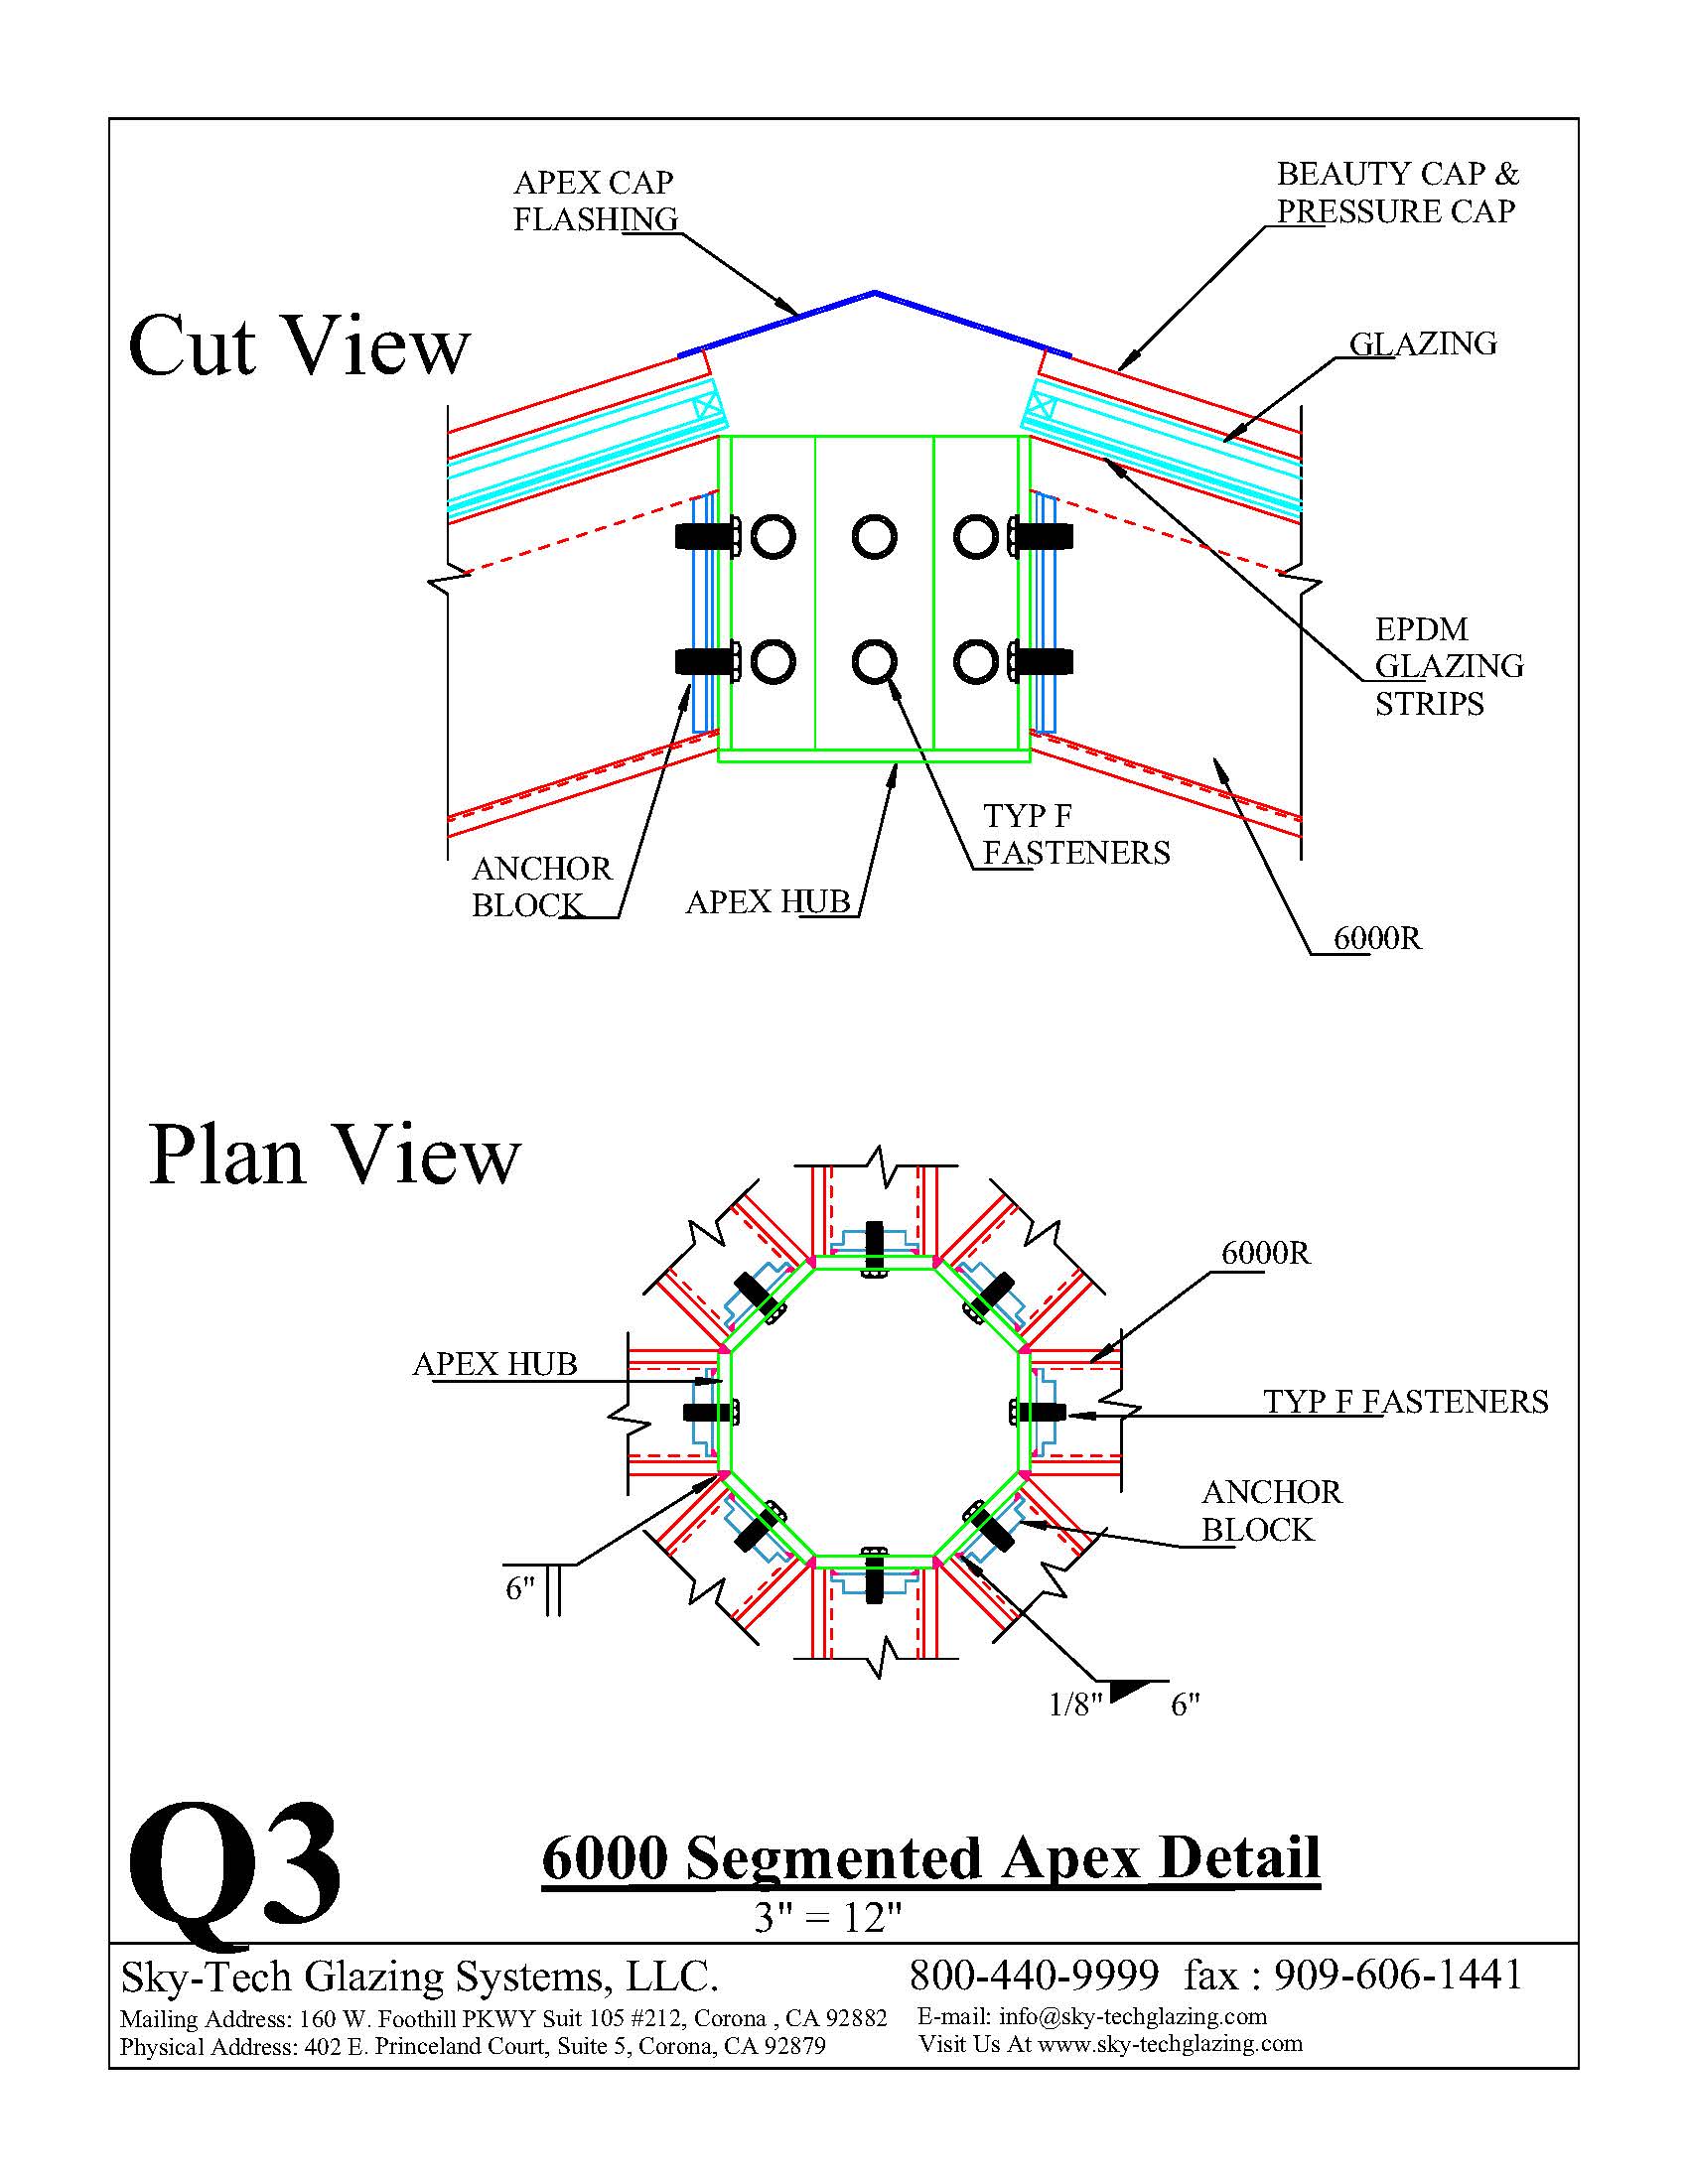 Q3 6000 Segmented Apex Detail